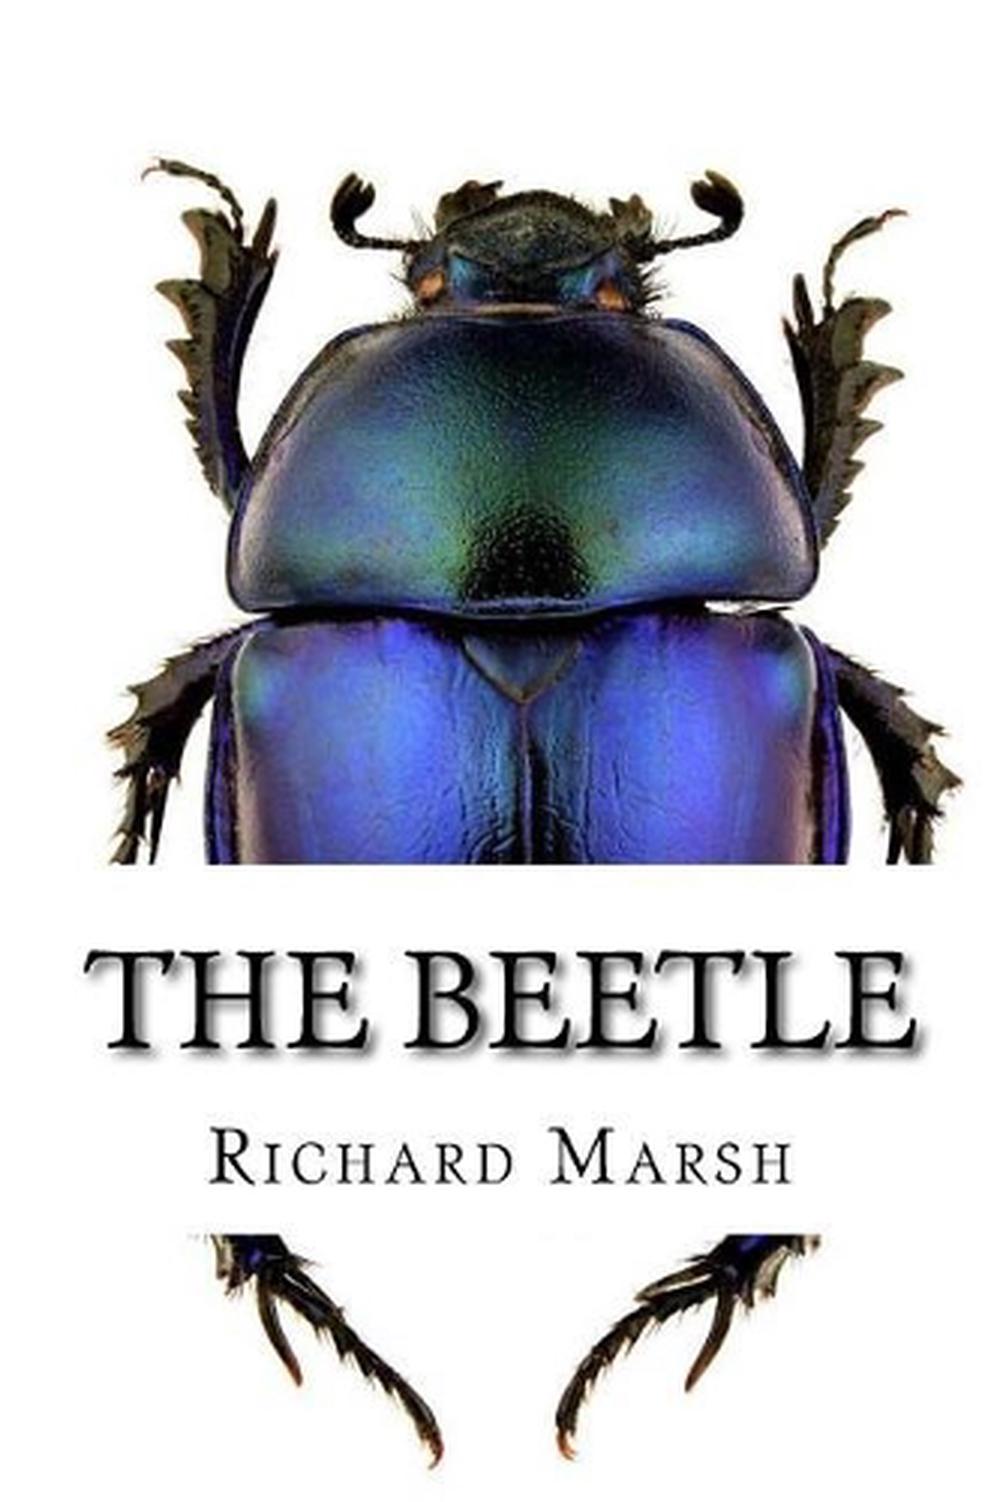 The Beetle by Richard Marsh